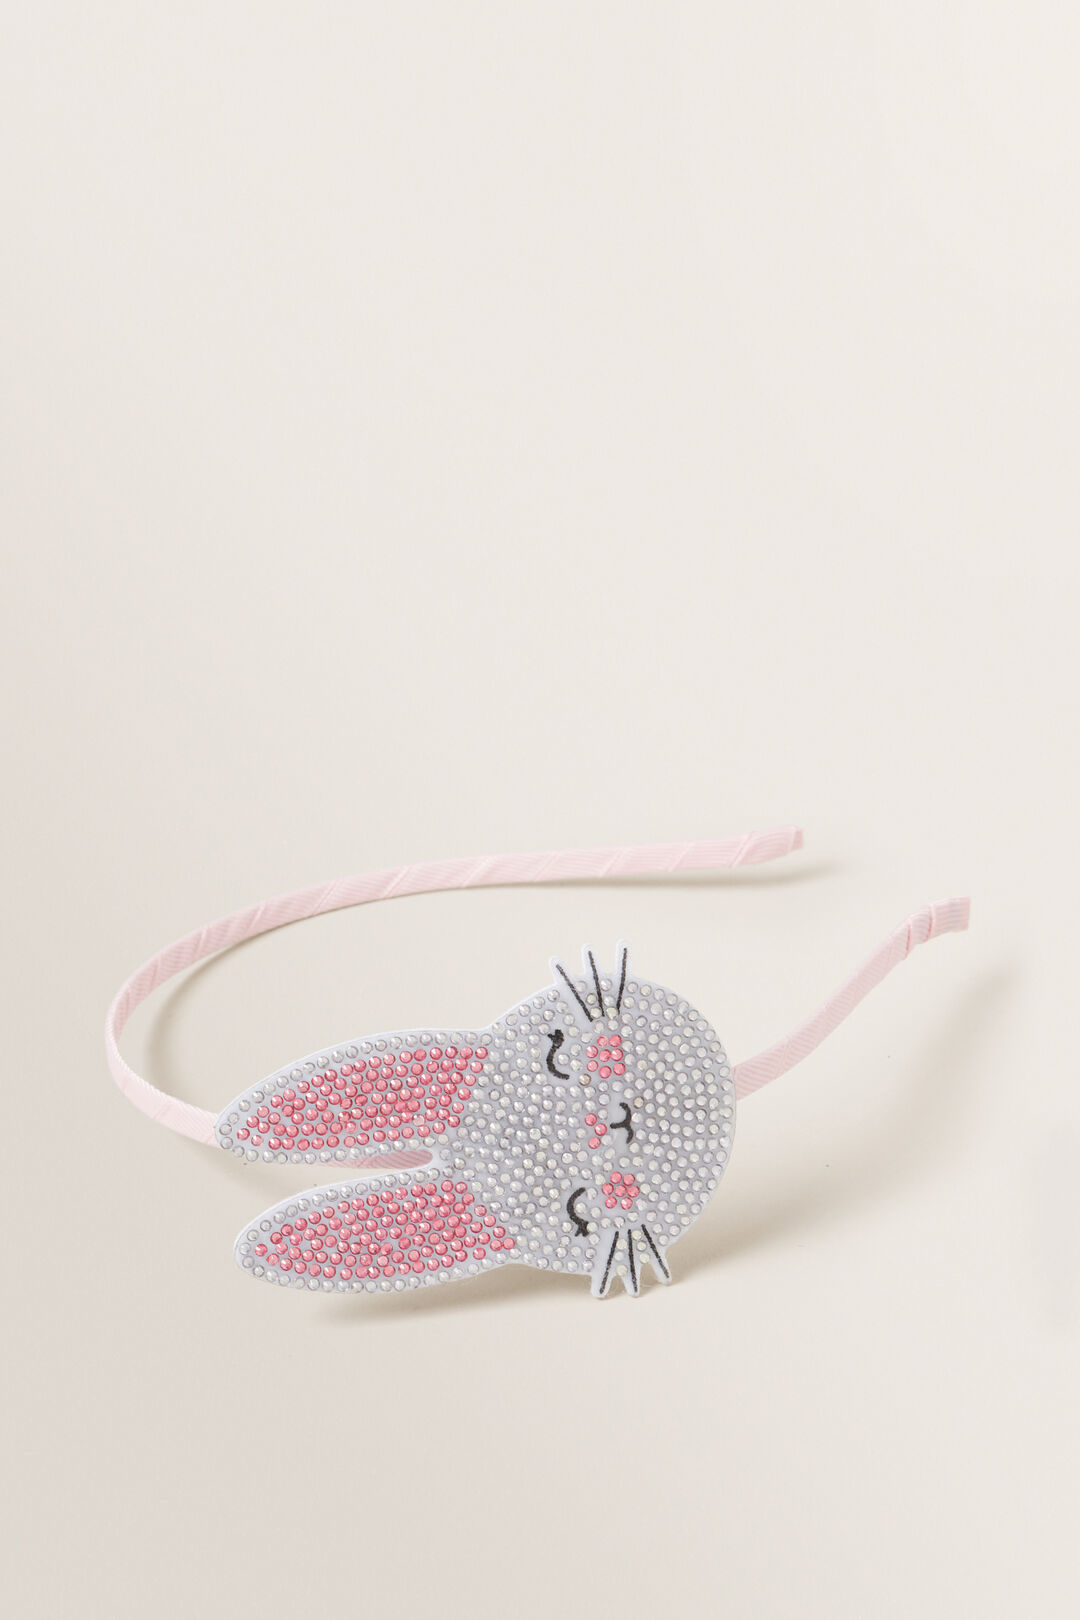 Gem Patch Bunny Headband  Multi  hi-res